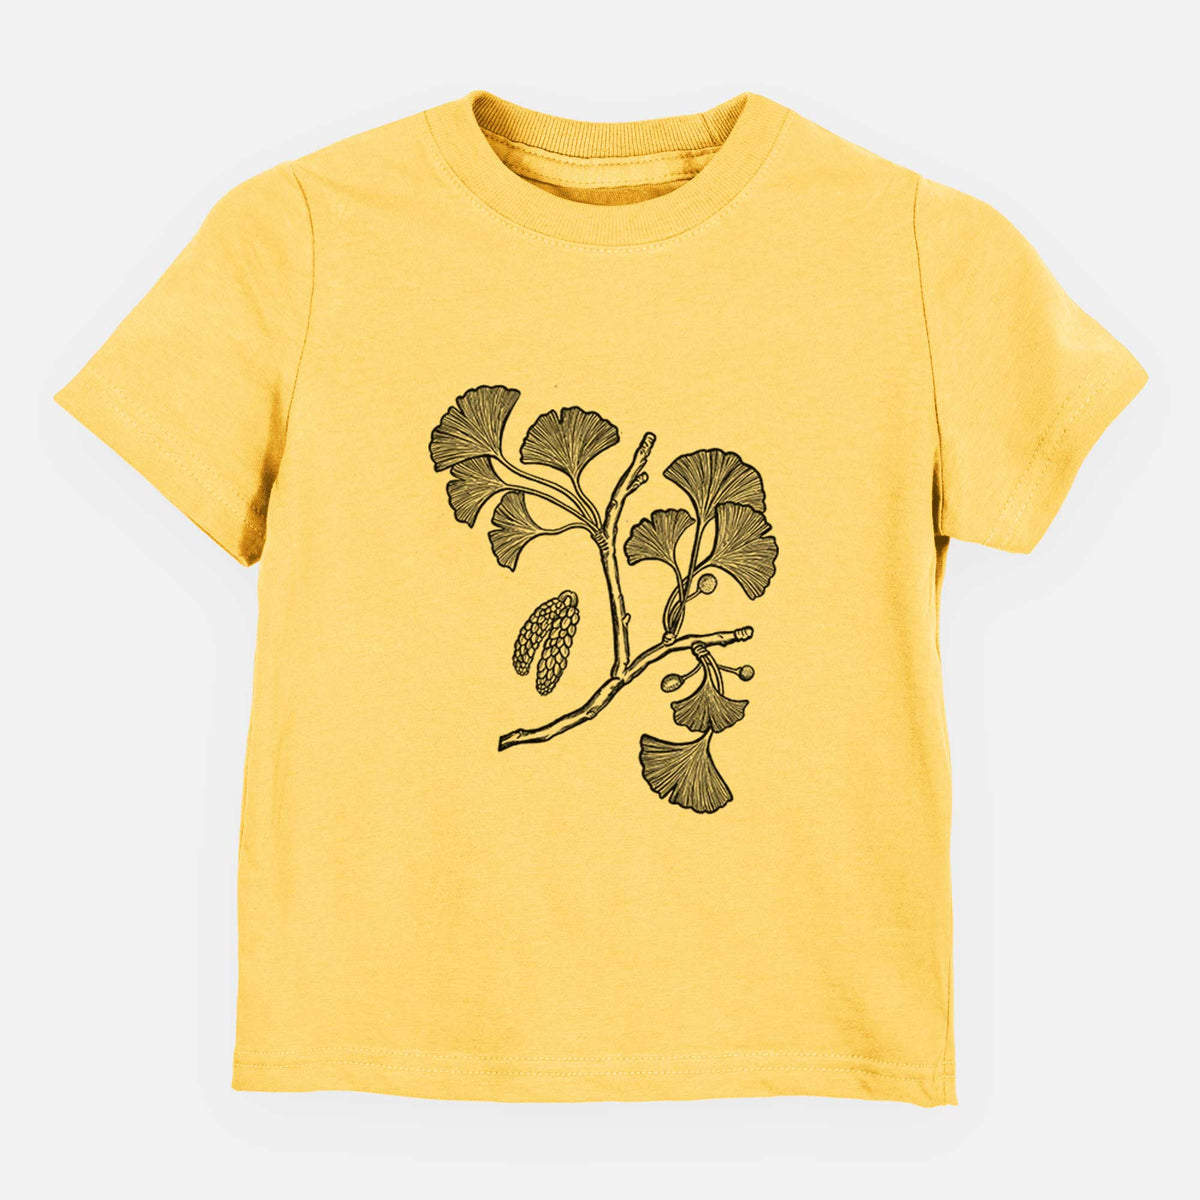 Ginkgo Biloba - Ginkgo Tree Stem with Leaves - Kids Shirt